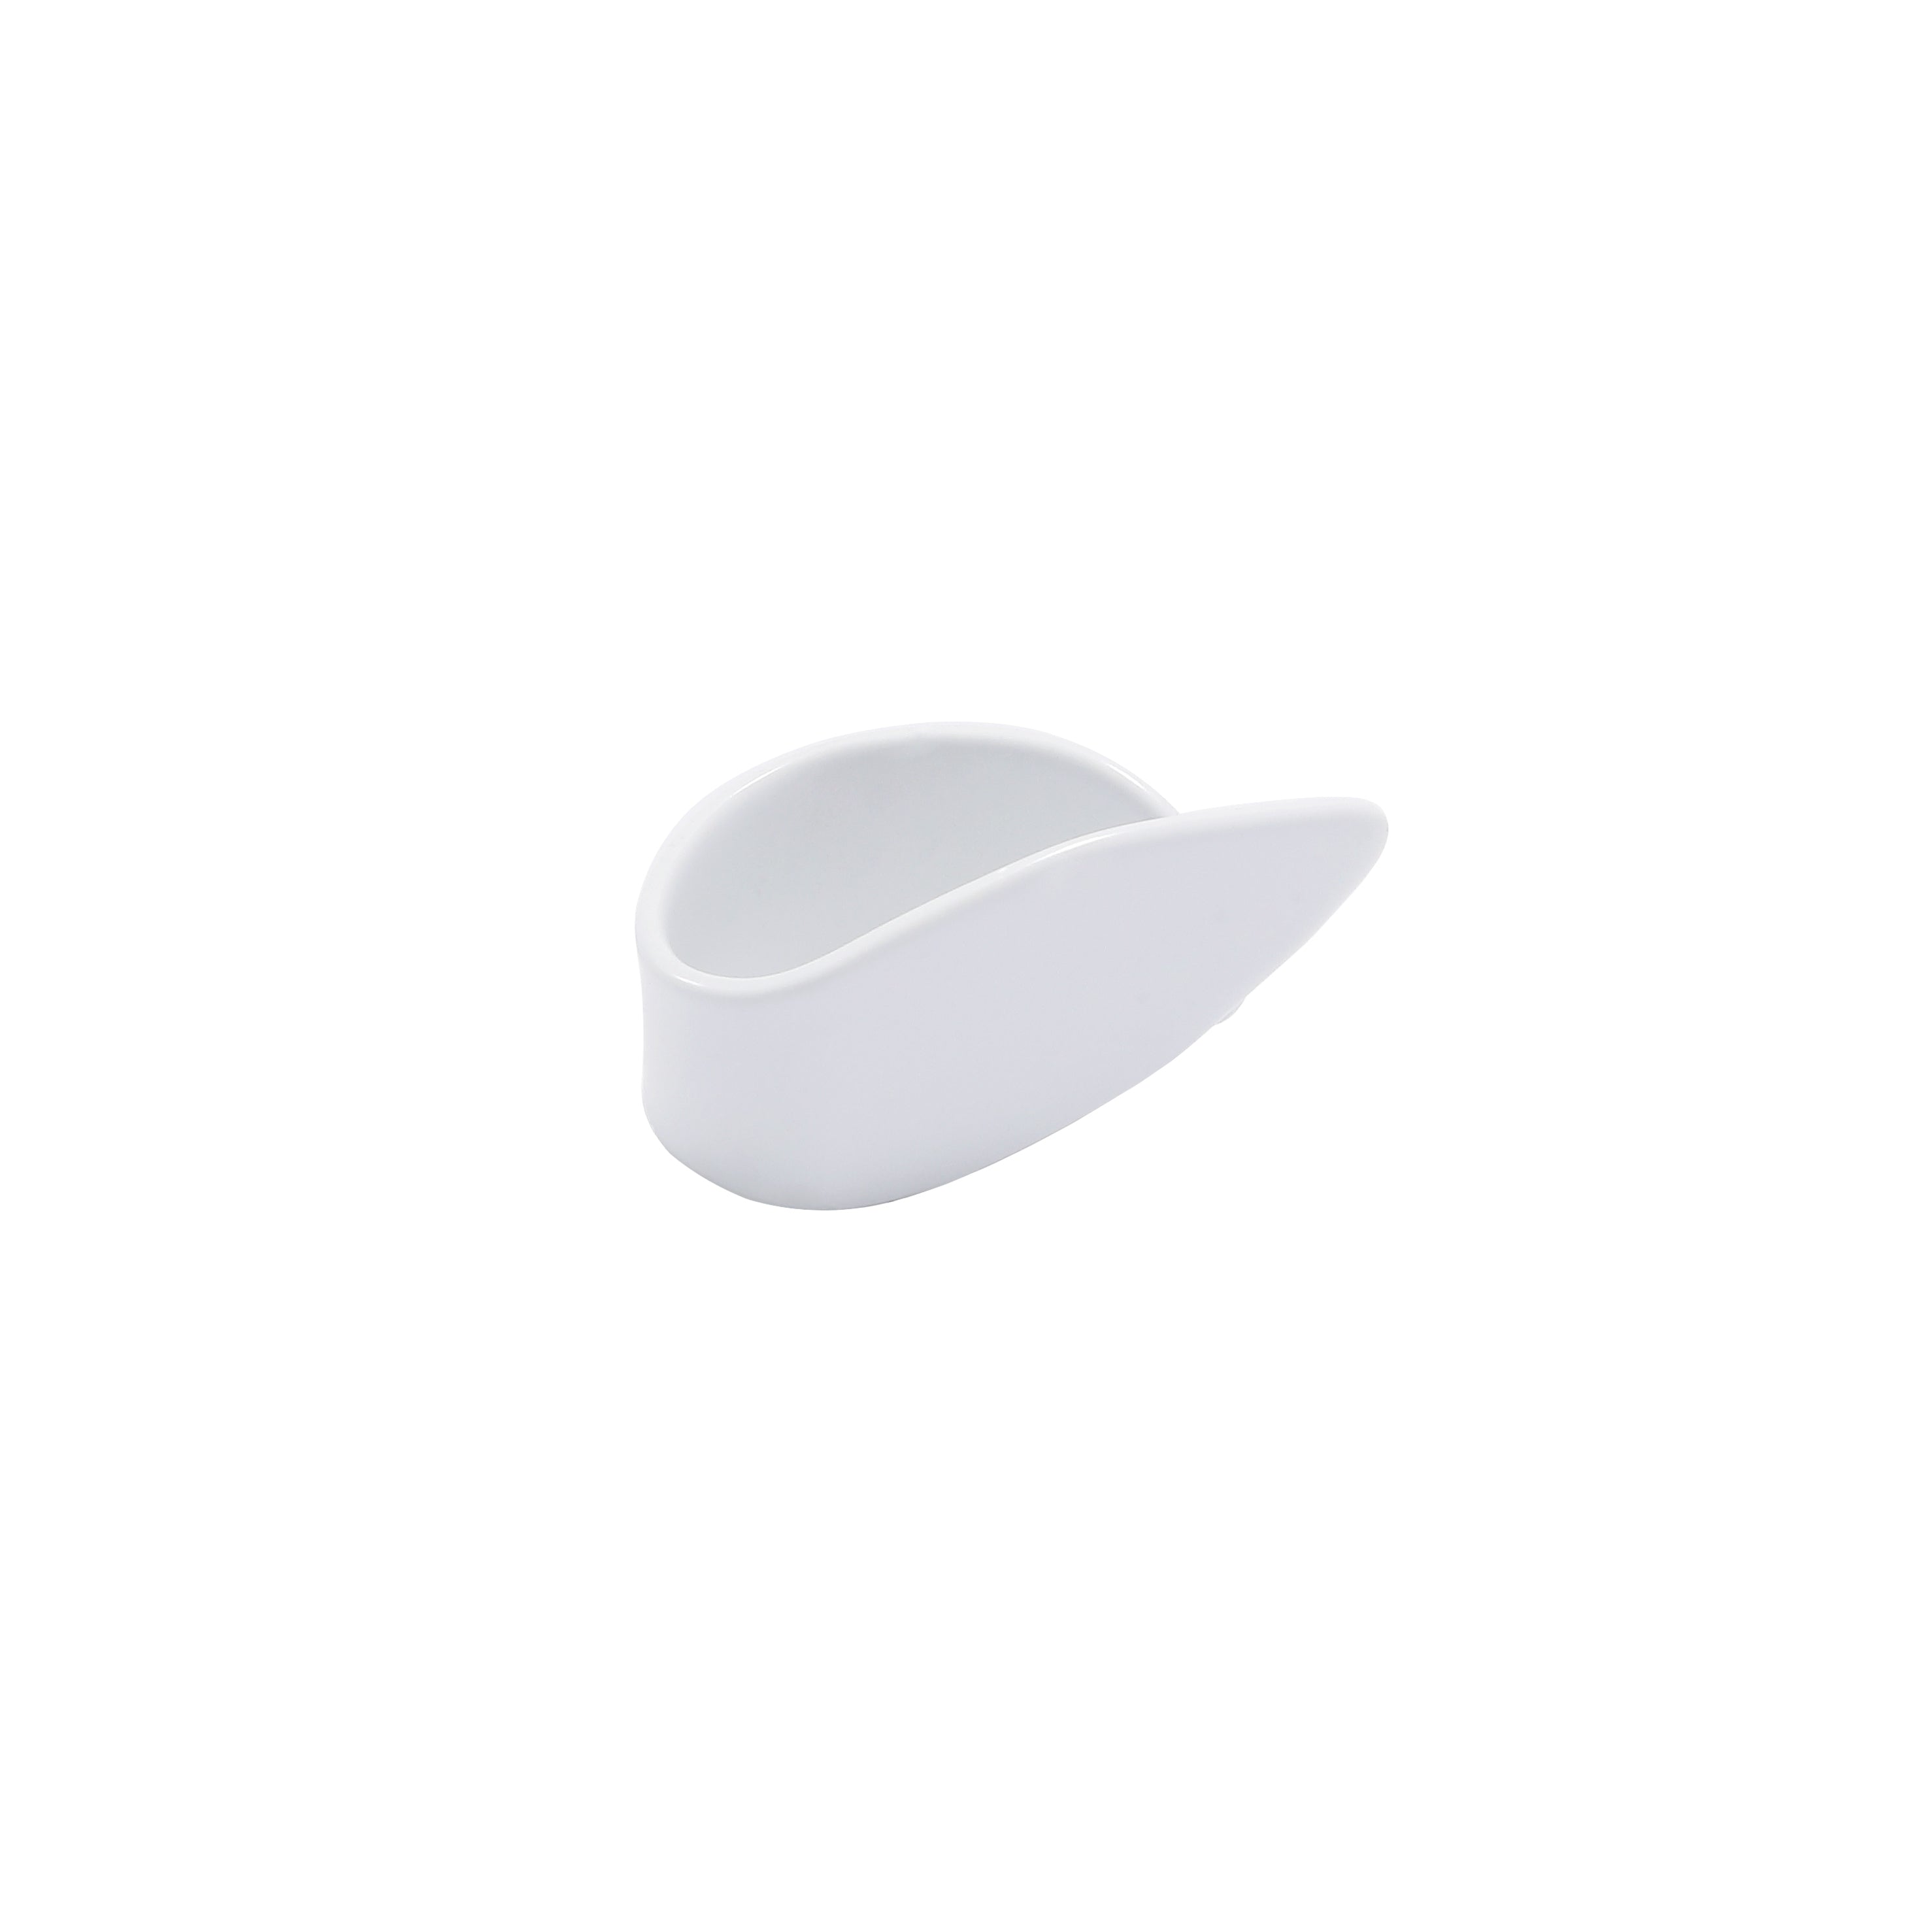 D'Addario NATIONAL Celluloid Medium Thumb Picks, White, 4-Pack